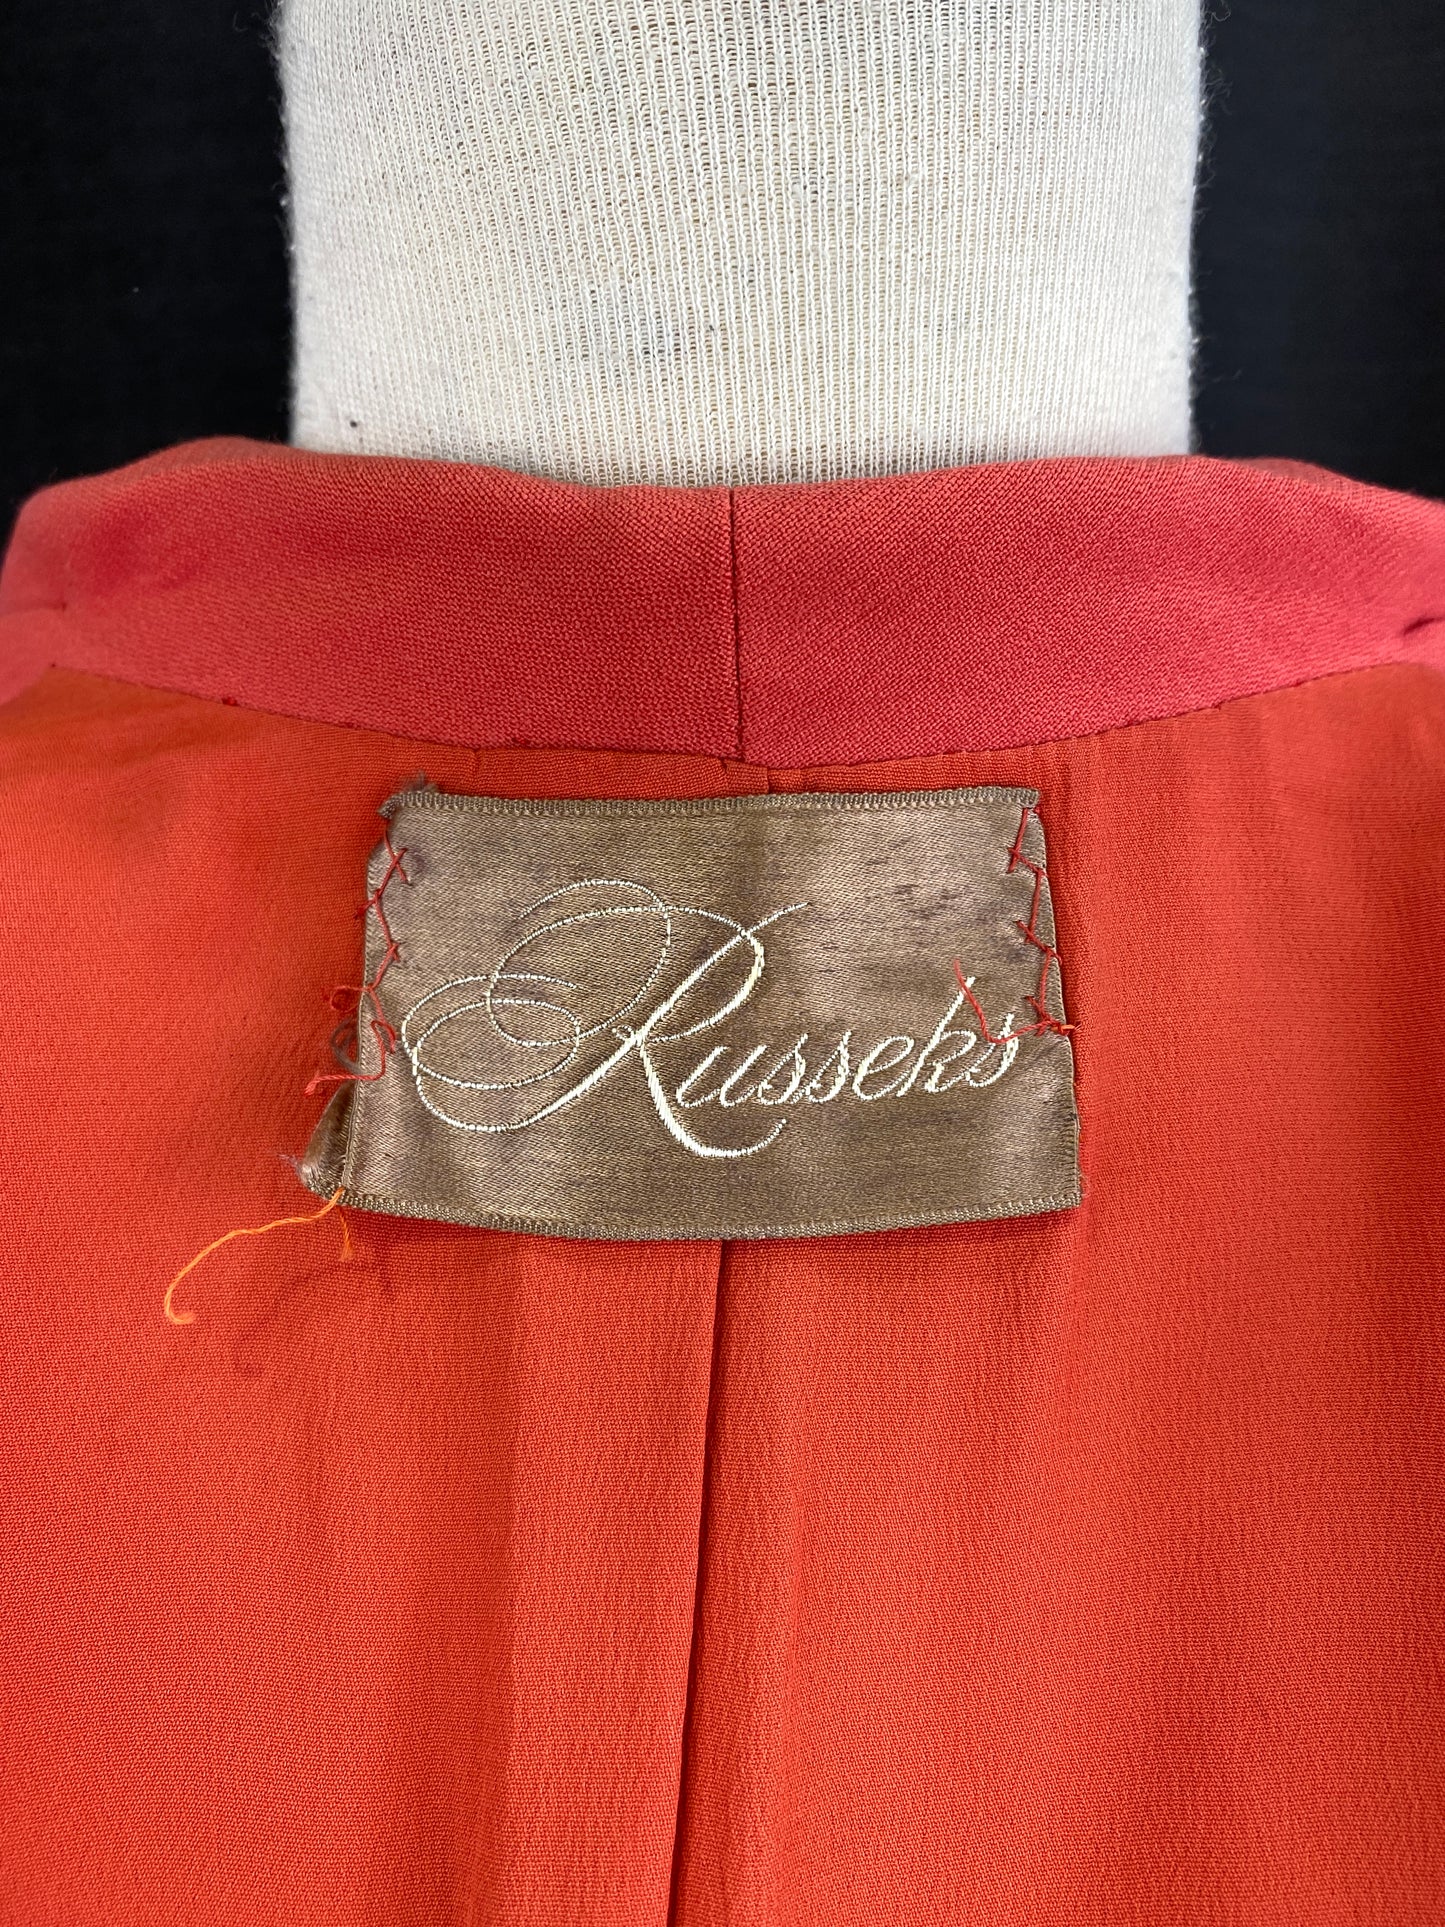 Vintage 1940s Coral Skirt Suit